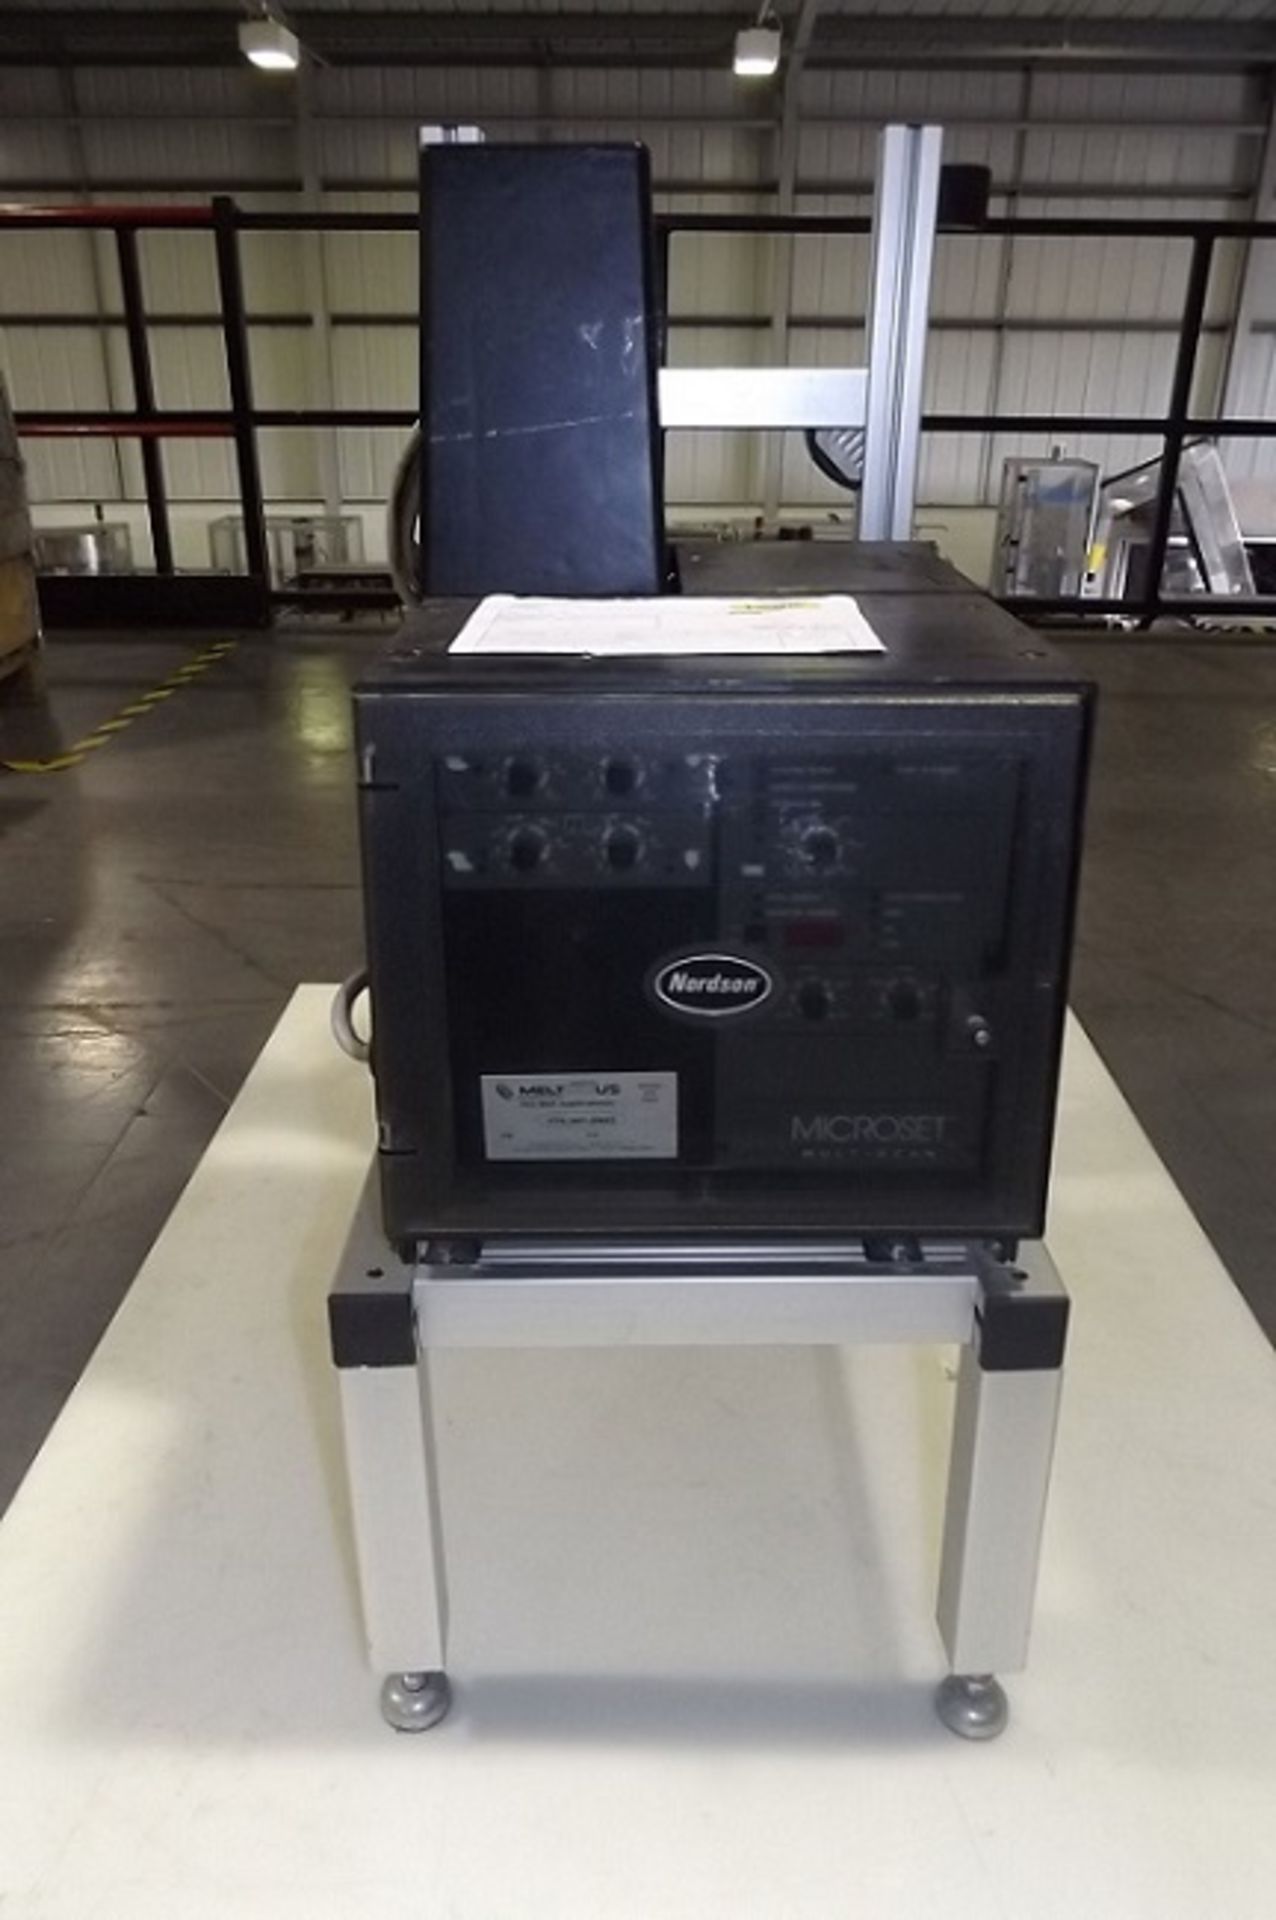 Nordson Series 3100 hot melt applicator. Electric operation 3100V/200-240 AC, designed for high-line